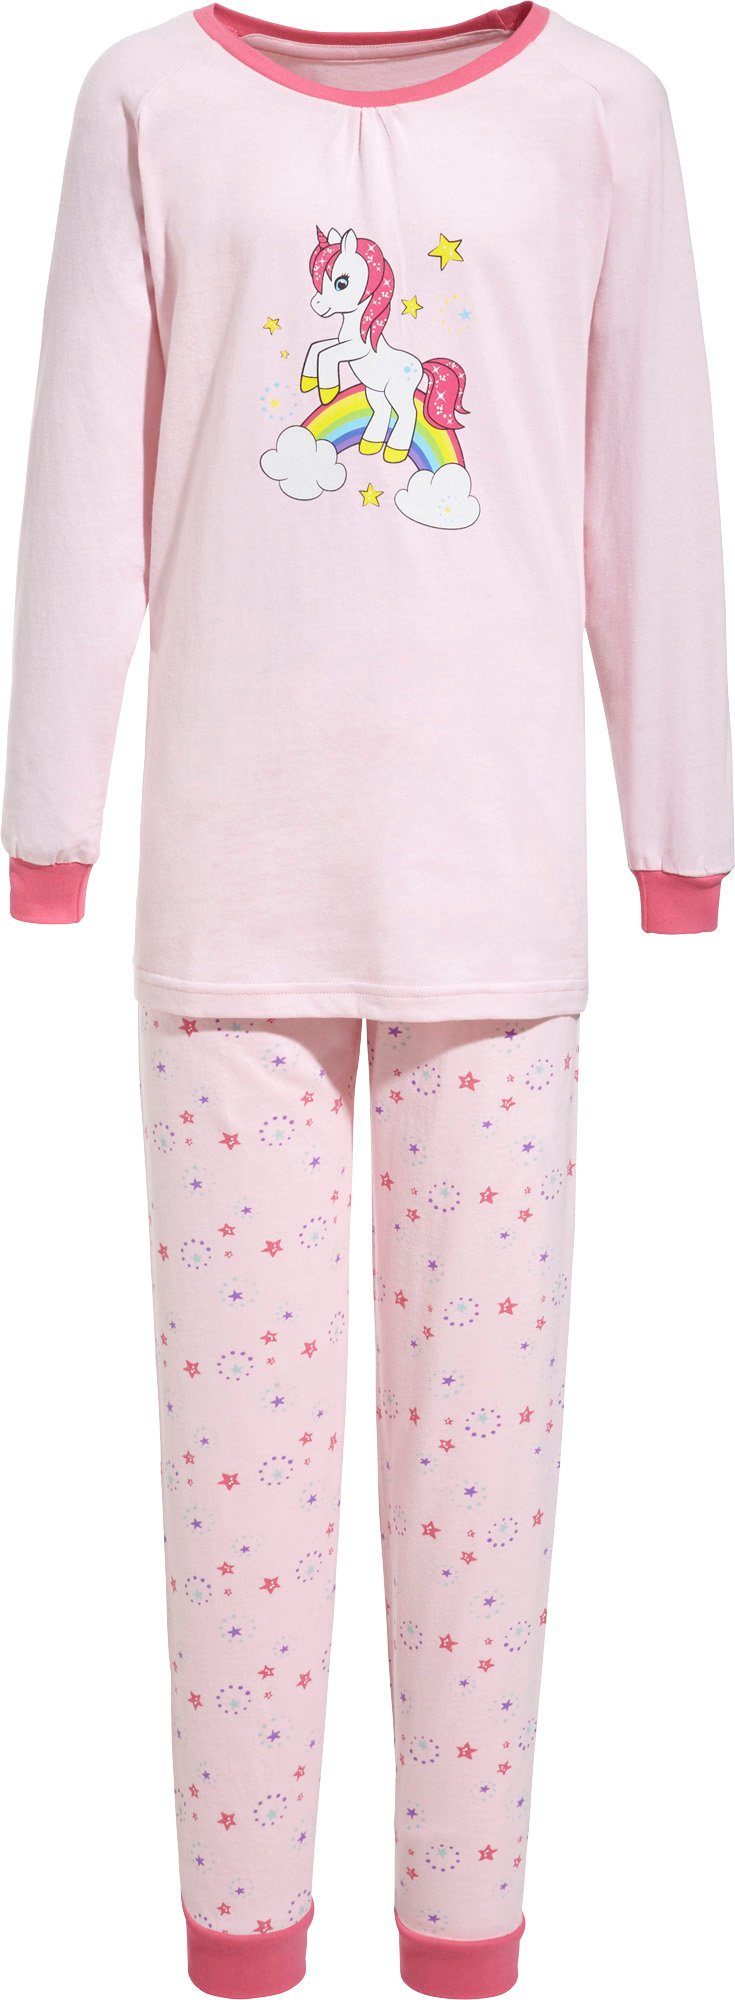 Erwin Müller Pyjama Kinder-Schlafanzug Single-Jersey Tiermotive, Material:  100% Baumwolle